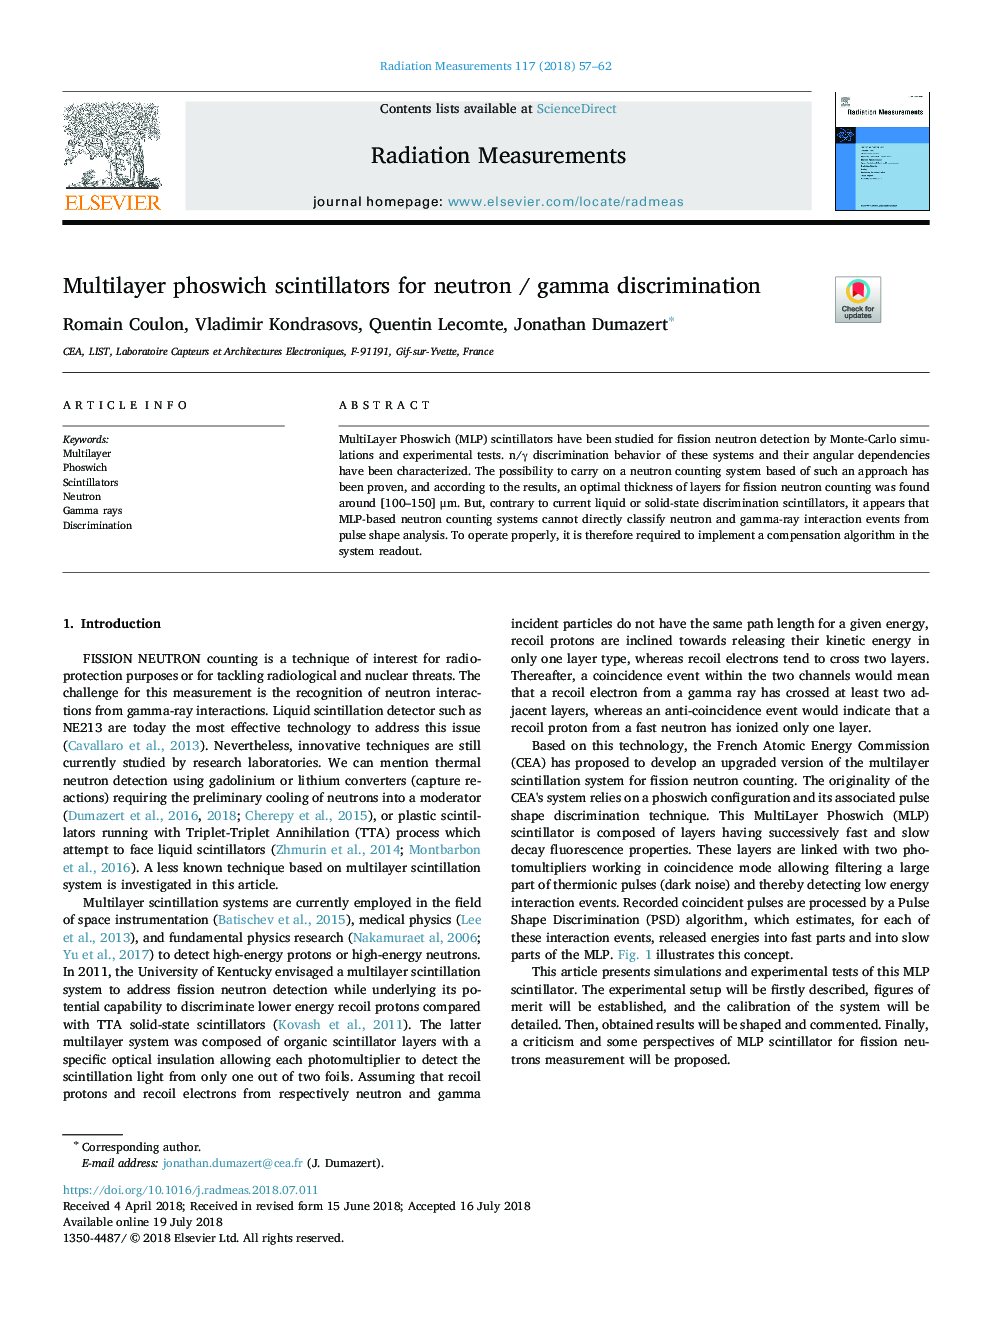 Multilayer phoswich scintillators for neutron / gamma discrimination